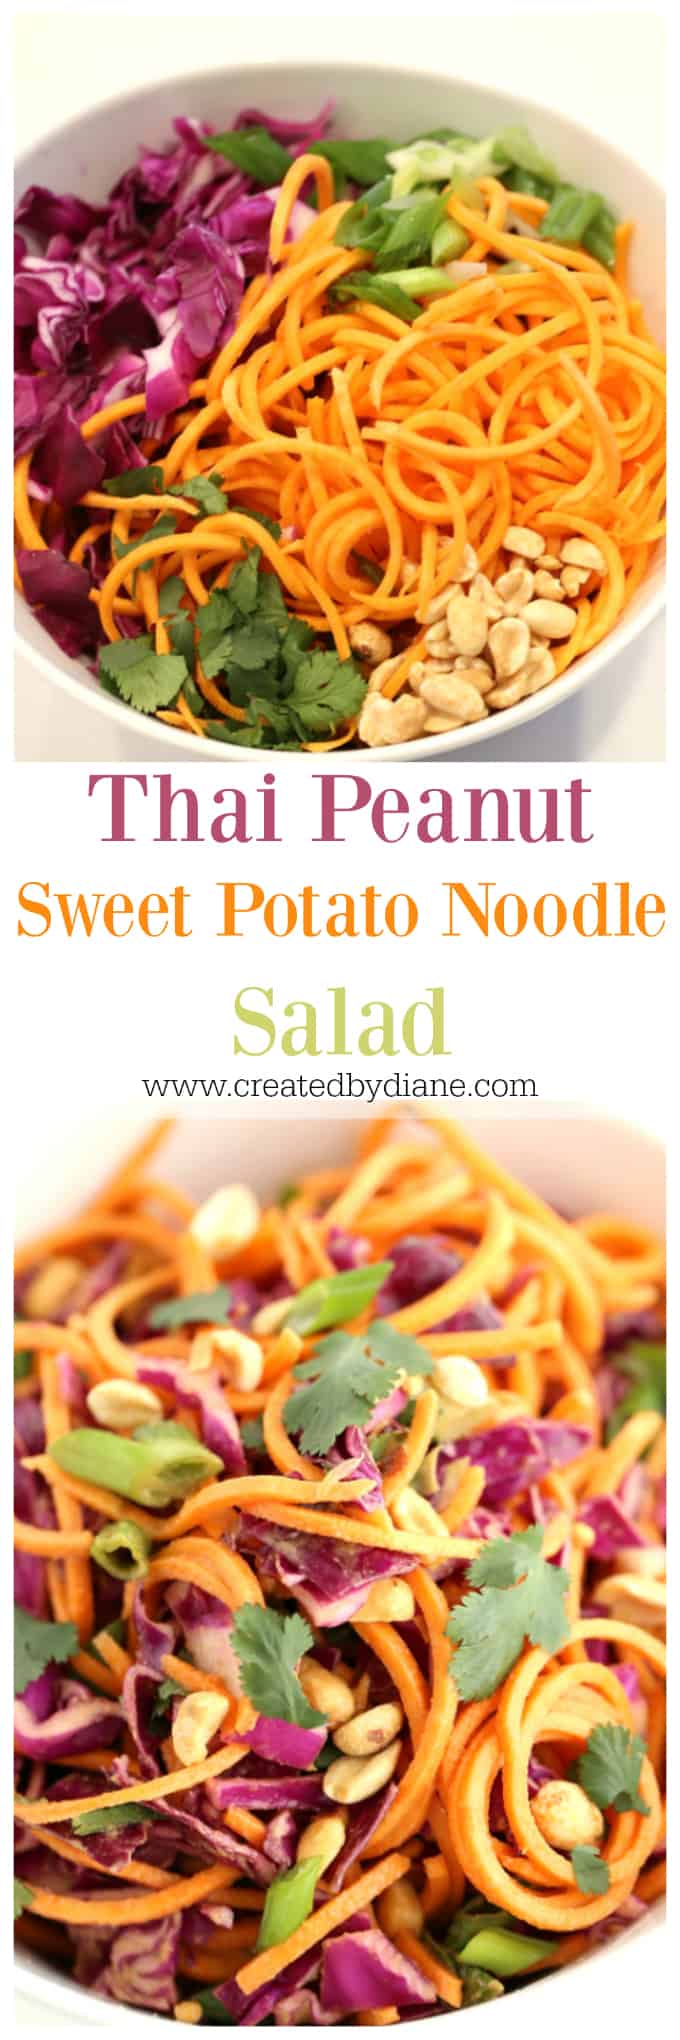 Thai Peanut Sweet Potato Noodle Salad www.createdbydiane.com